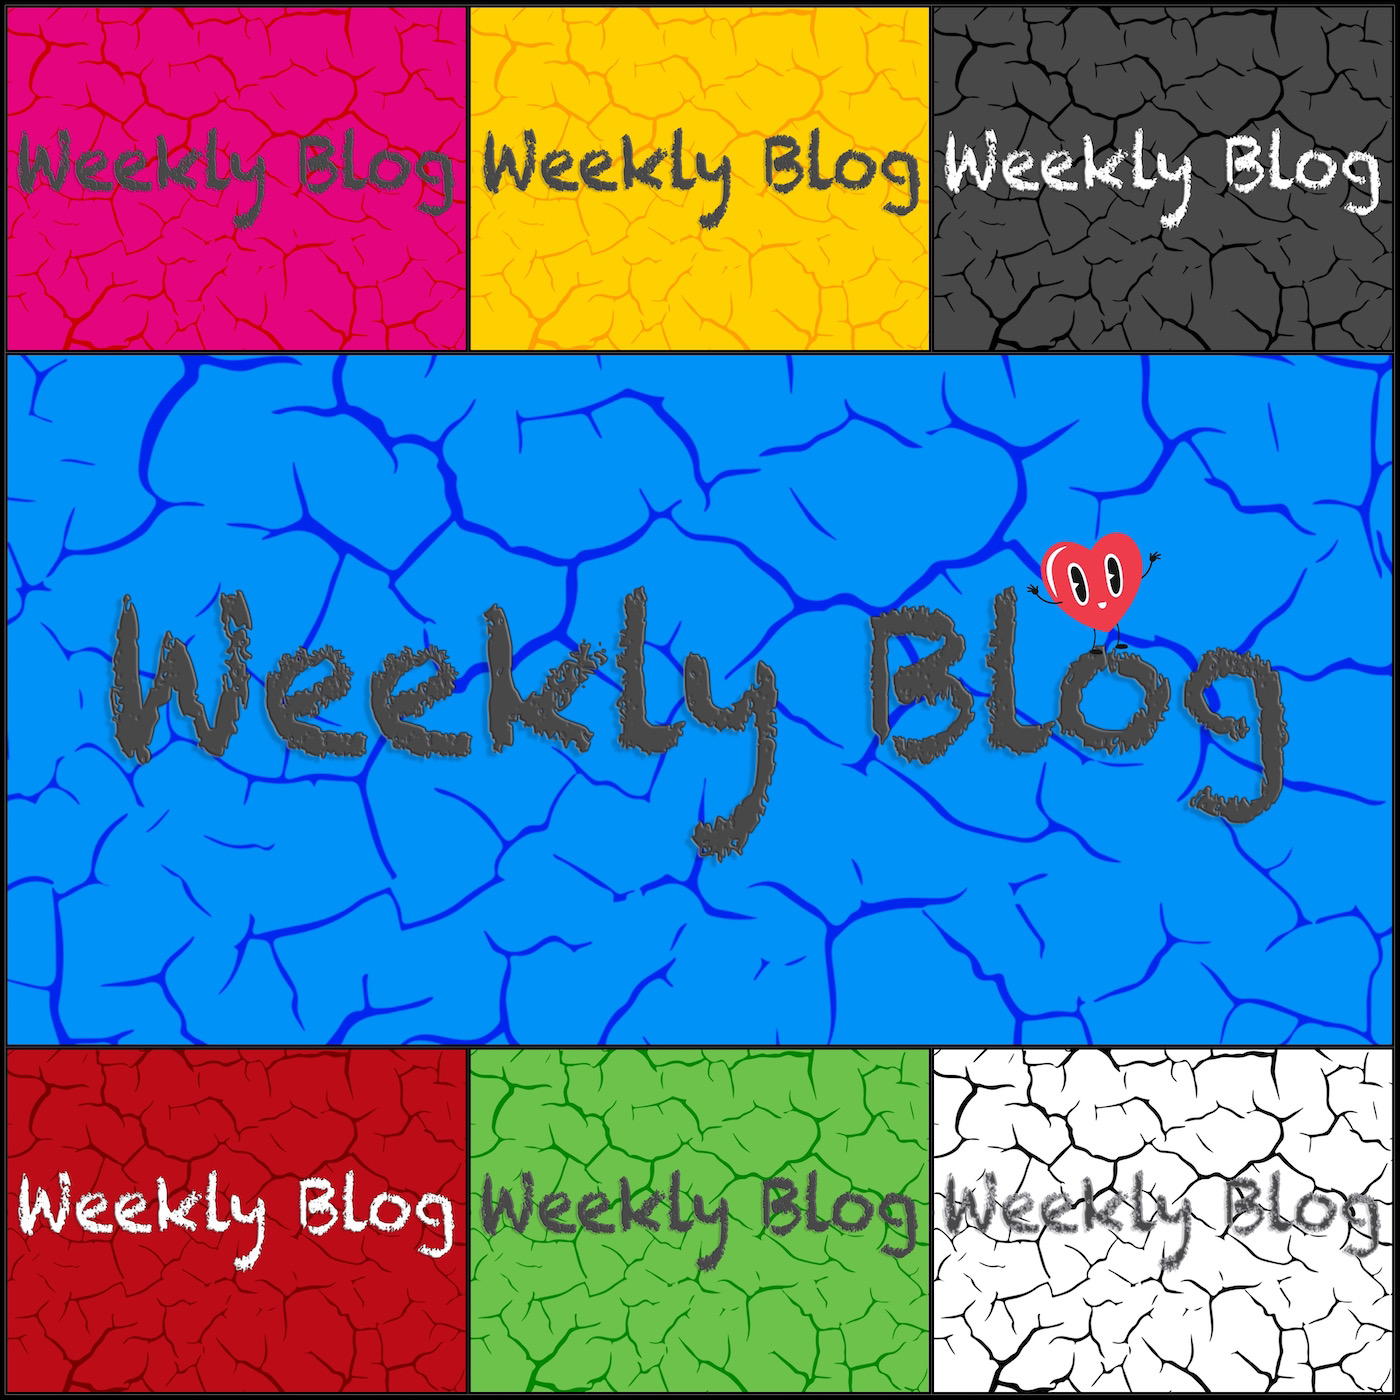 Die Weekly Blogs im Jahr 2021